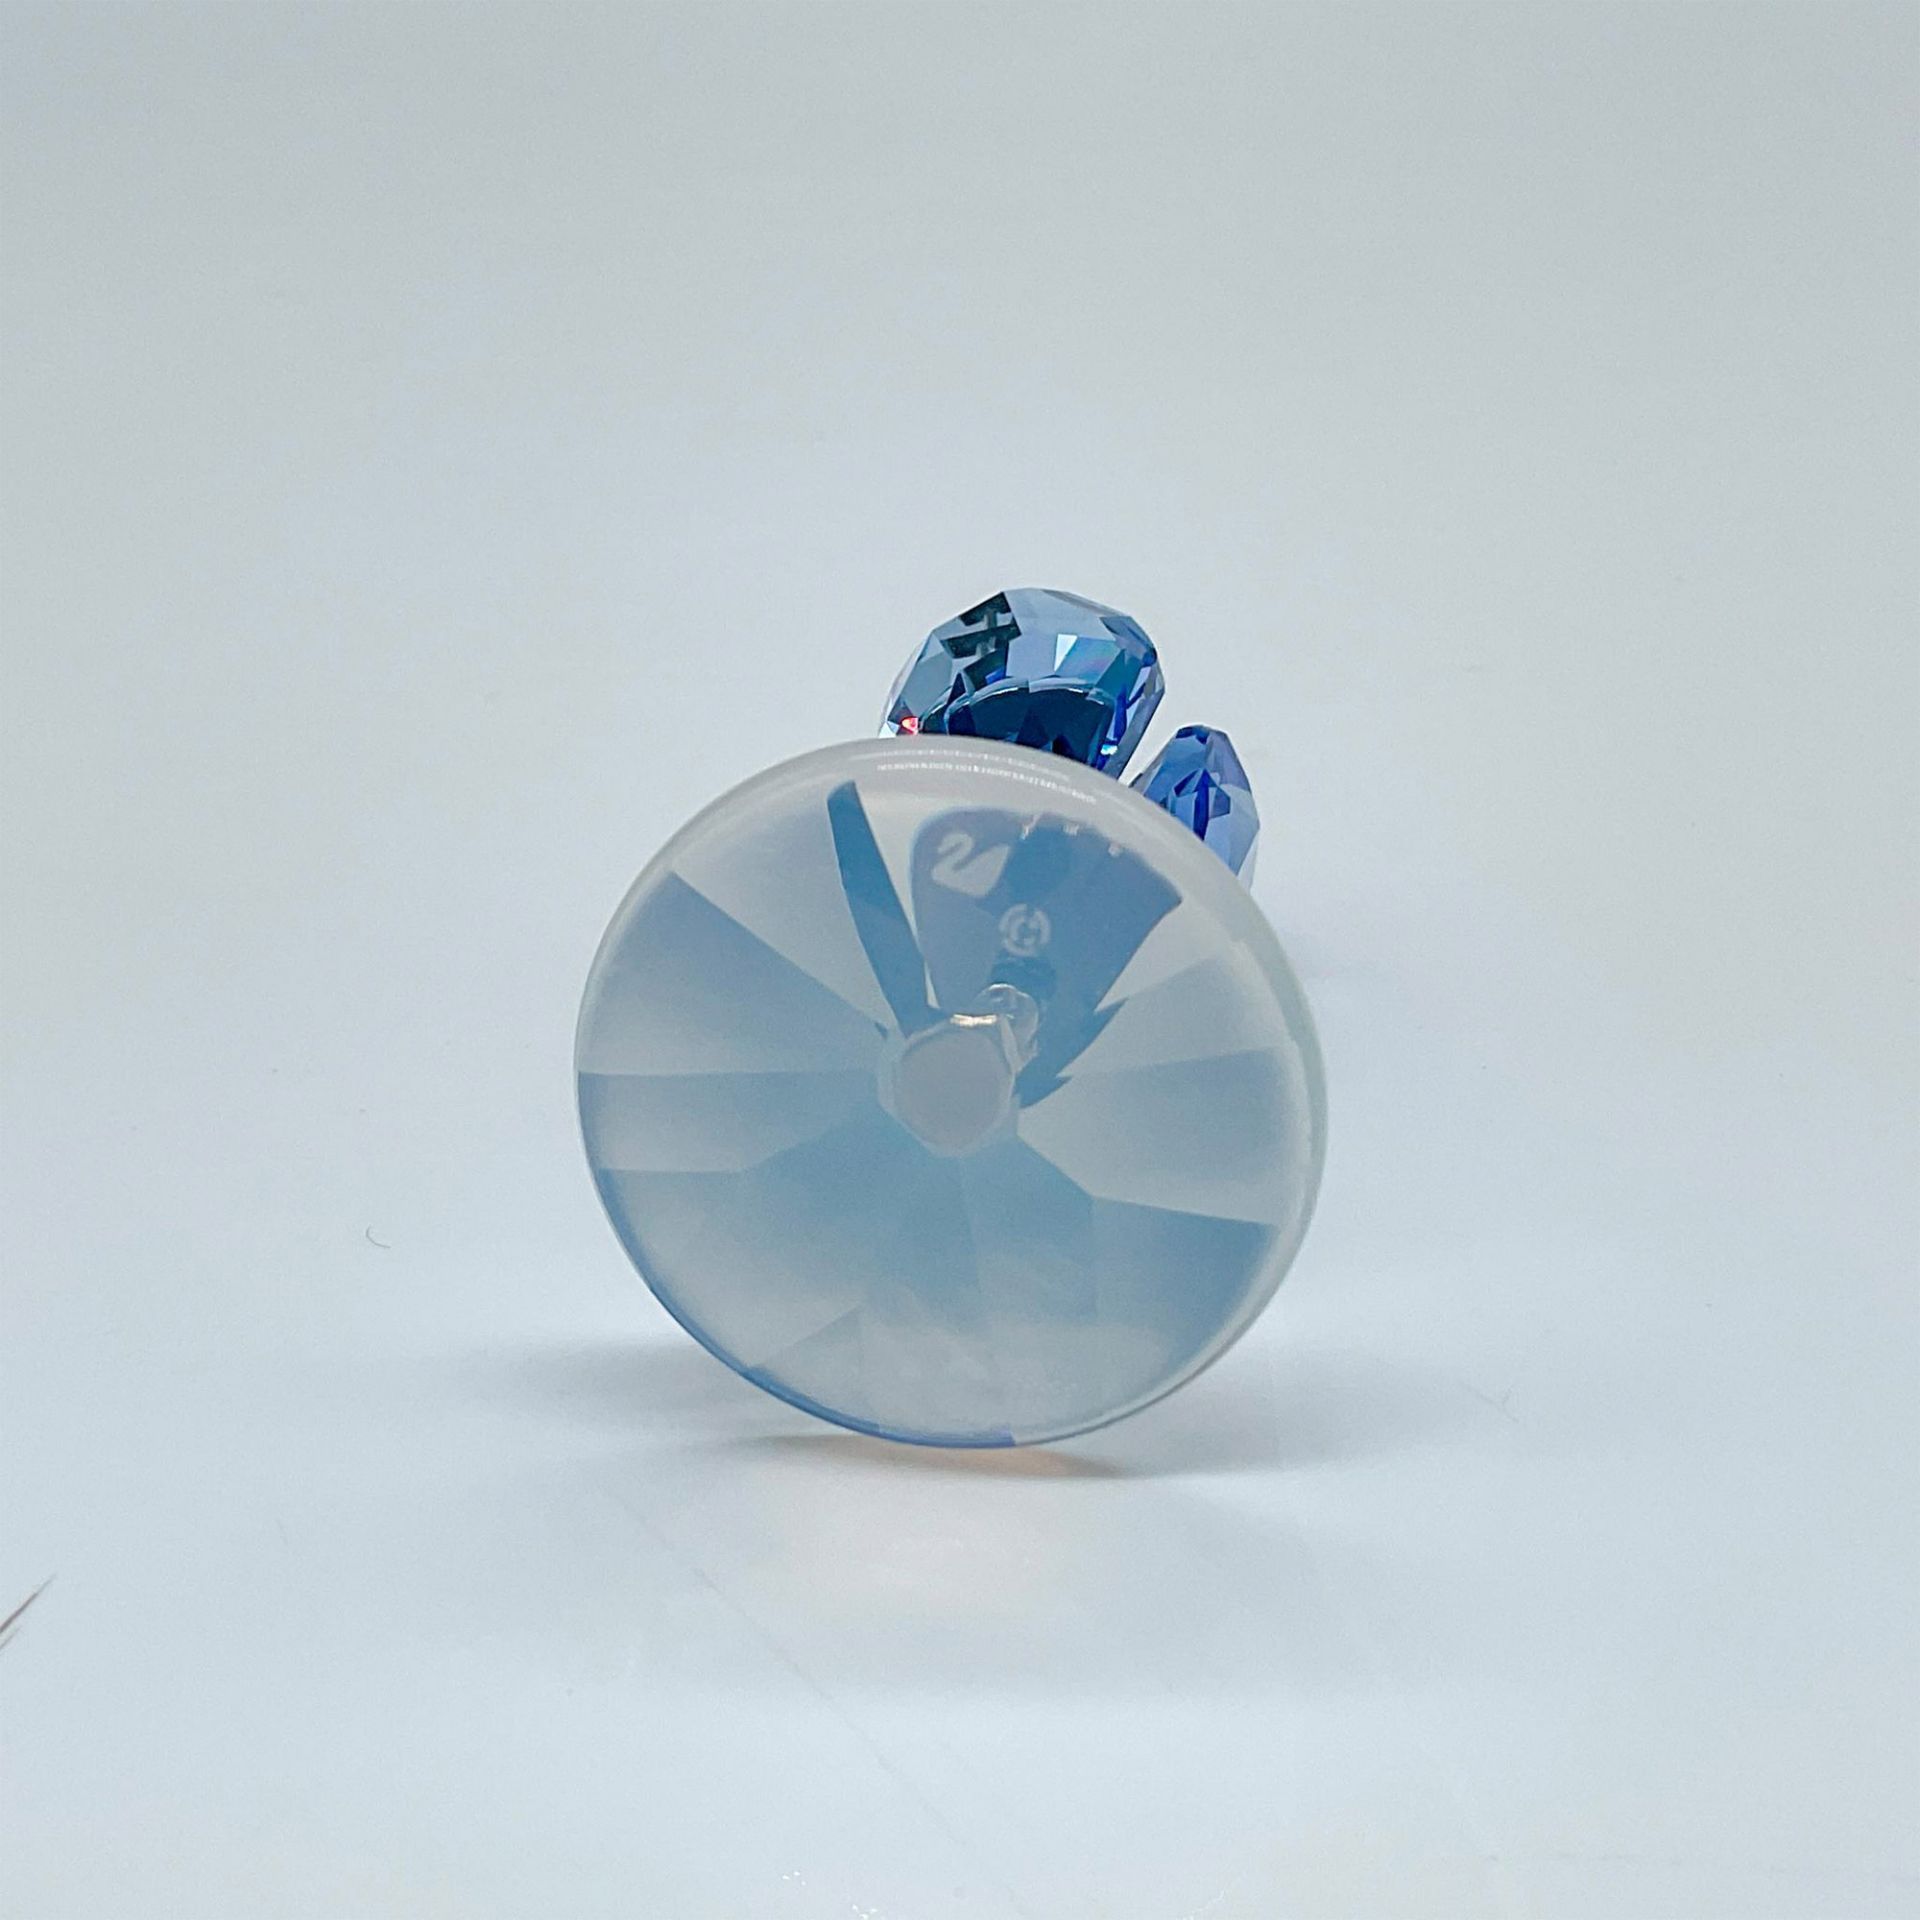 Swarovski Crystal Figurine, Rocking Flower Juliette - Image 3 of 3